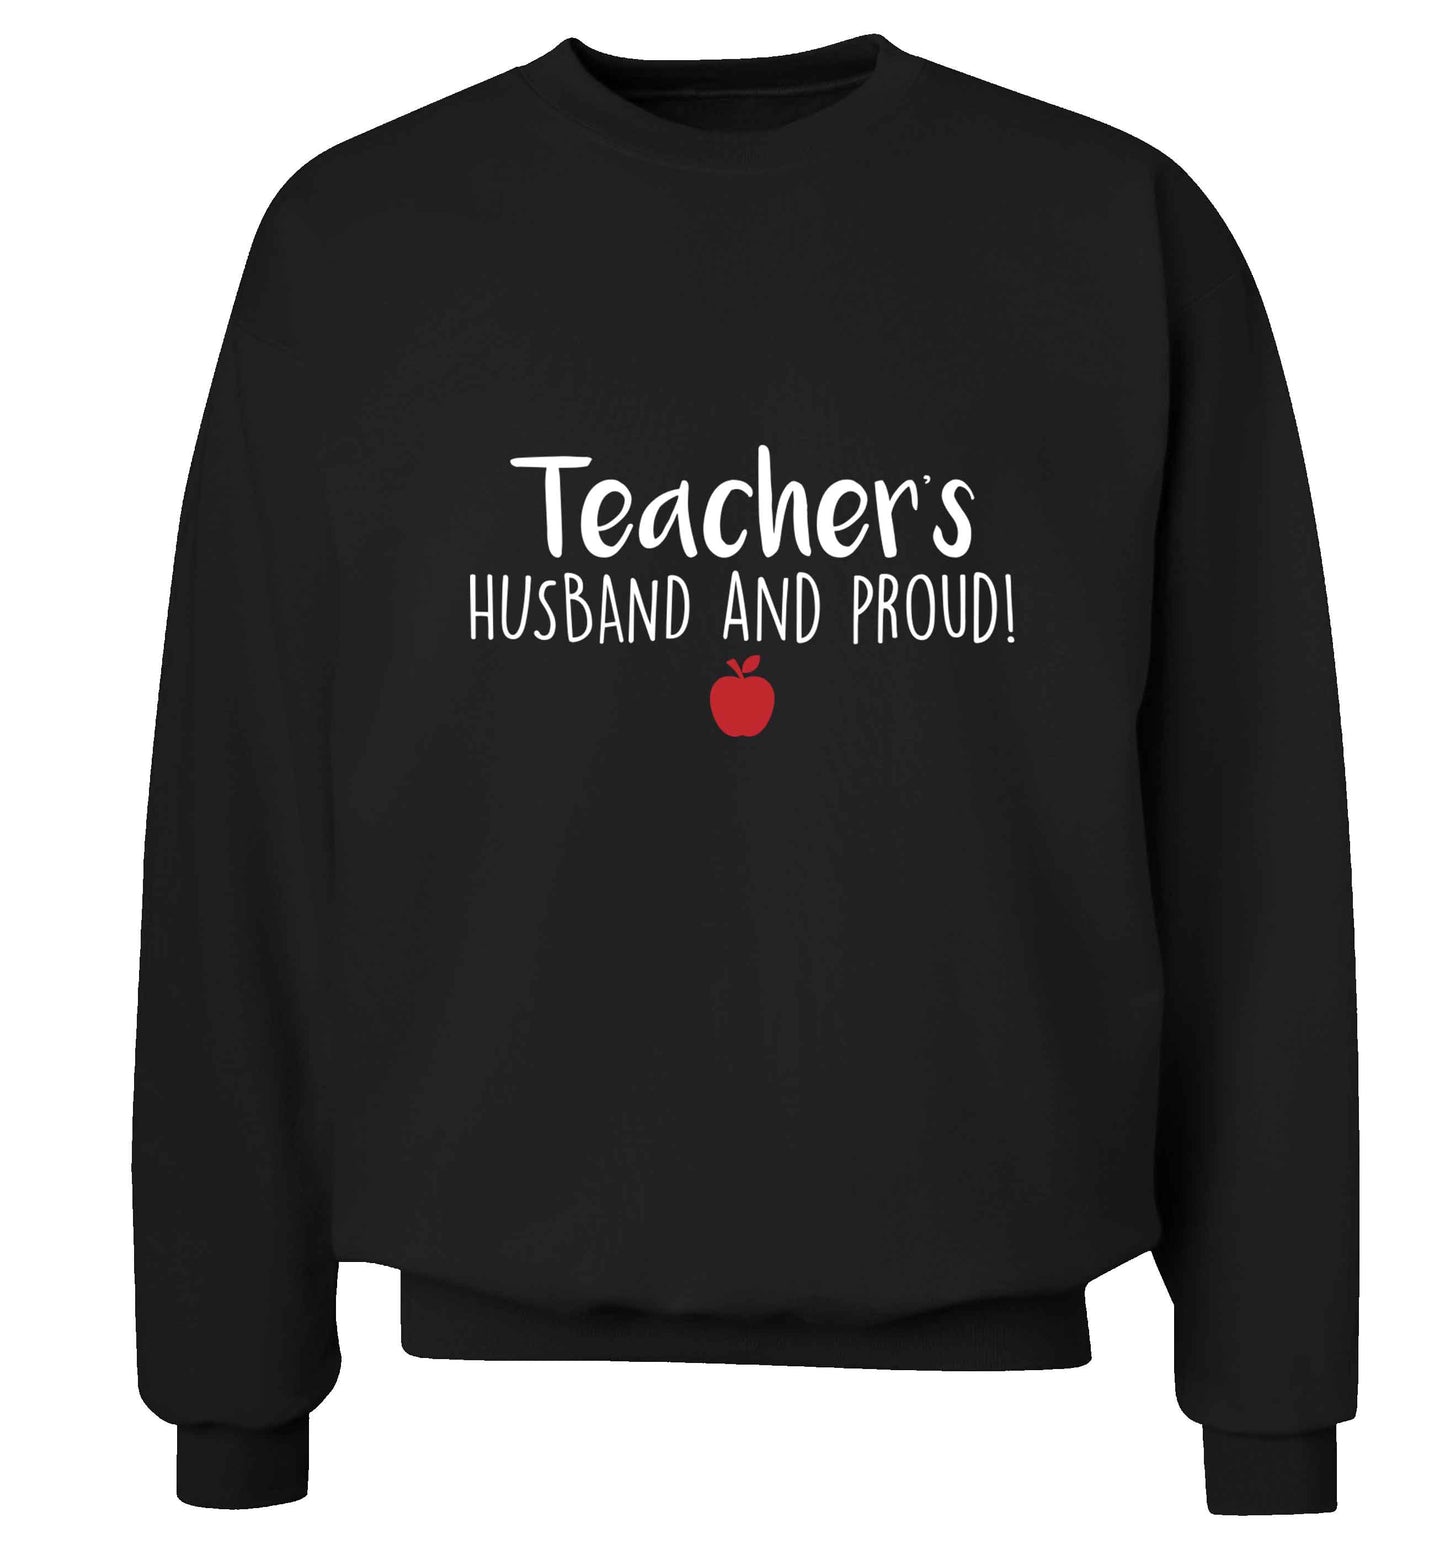 Teachers husband and proud adult's unisex black sweater 2XL